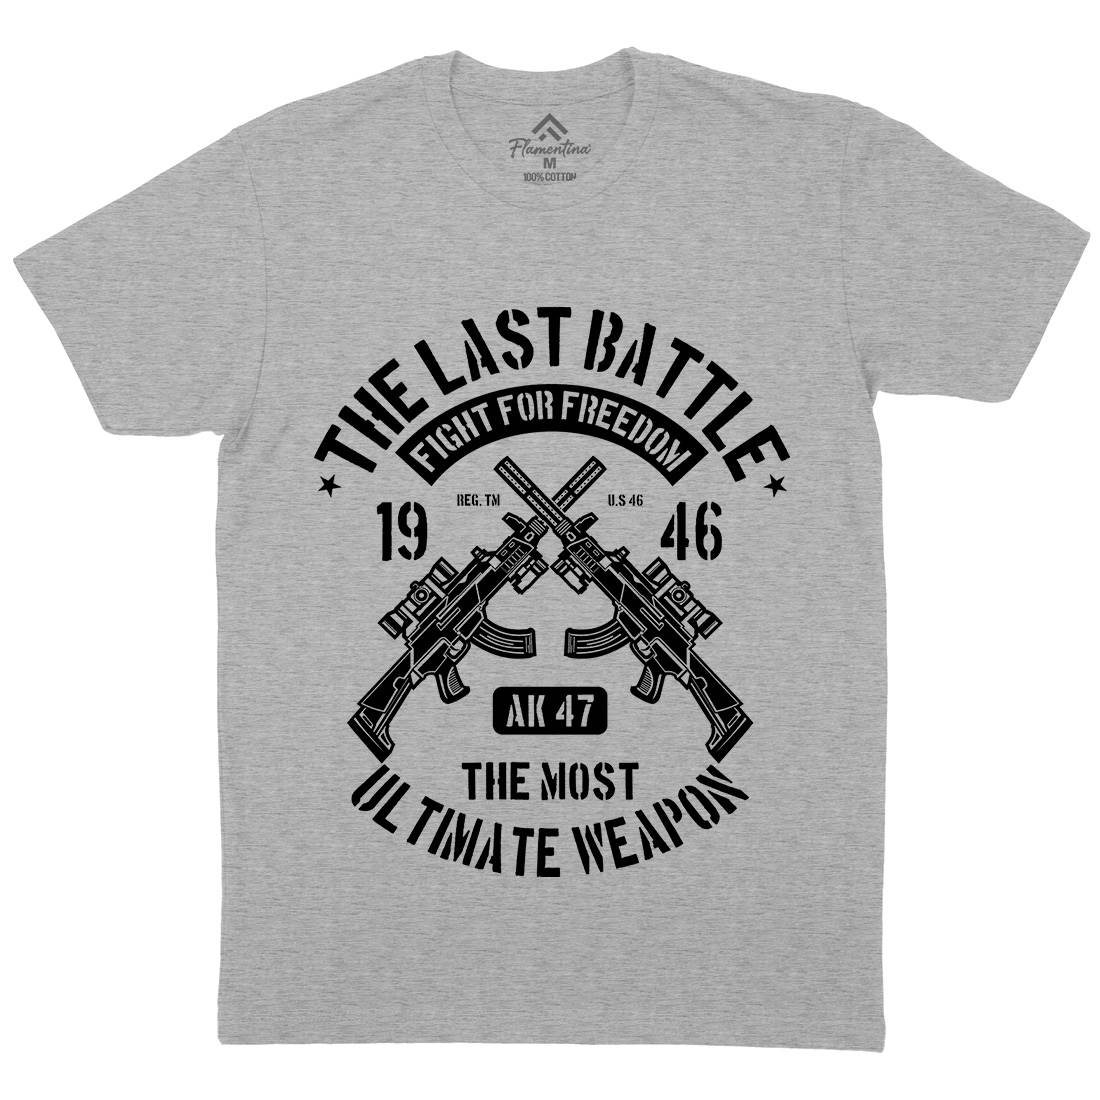 Last Battle Mens Organic Crew Neck T-Shirt Army A174